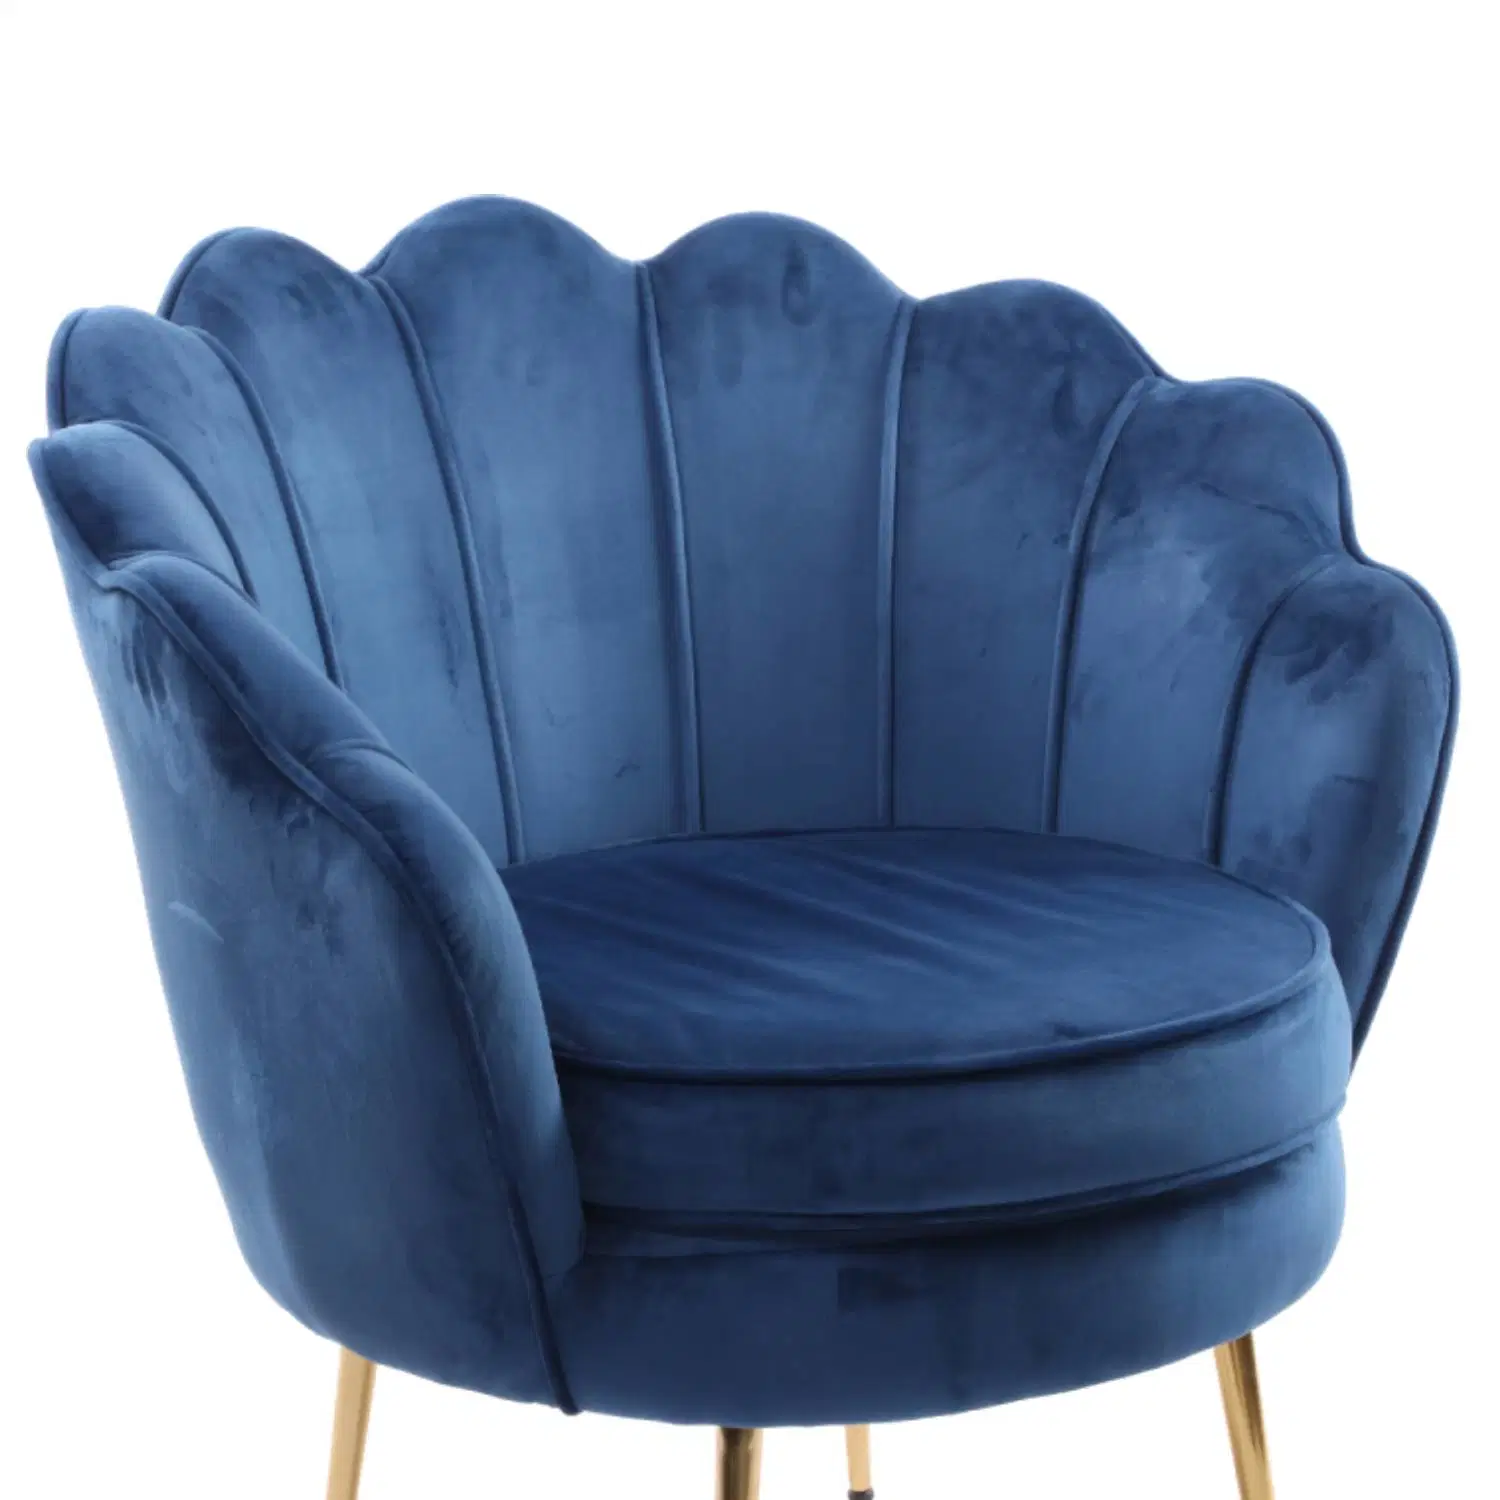 Sidanli Fabric Living Room Chair with Metal Legs.